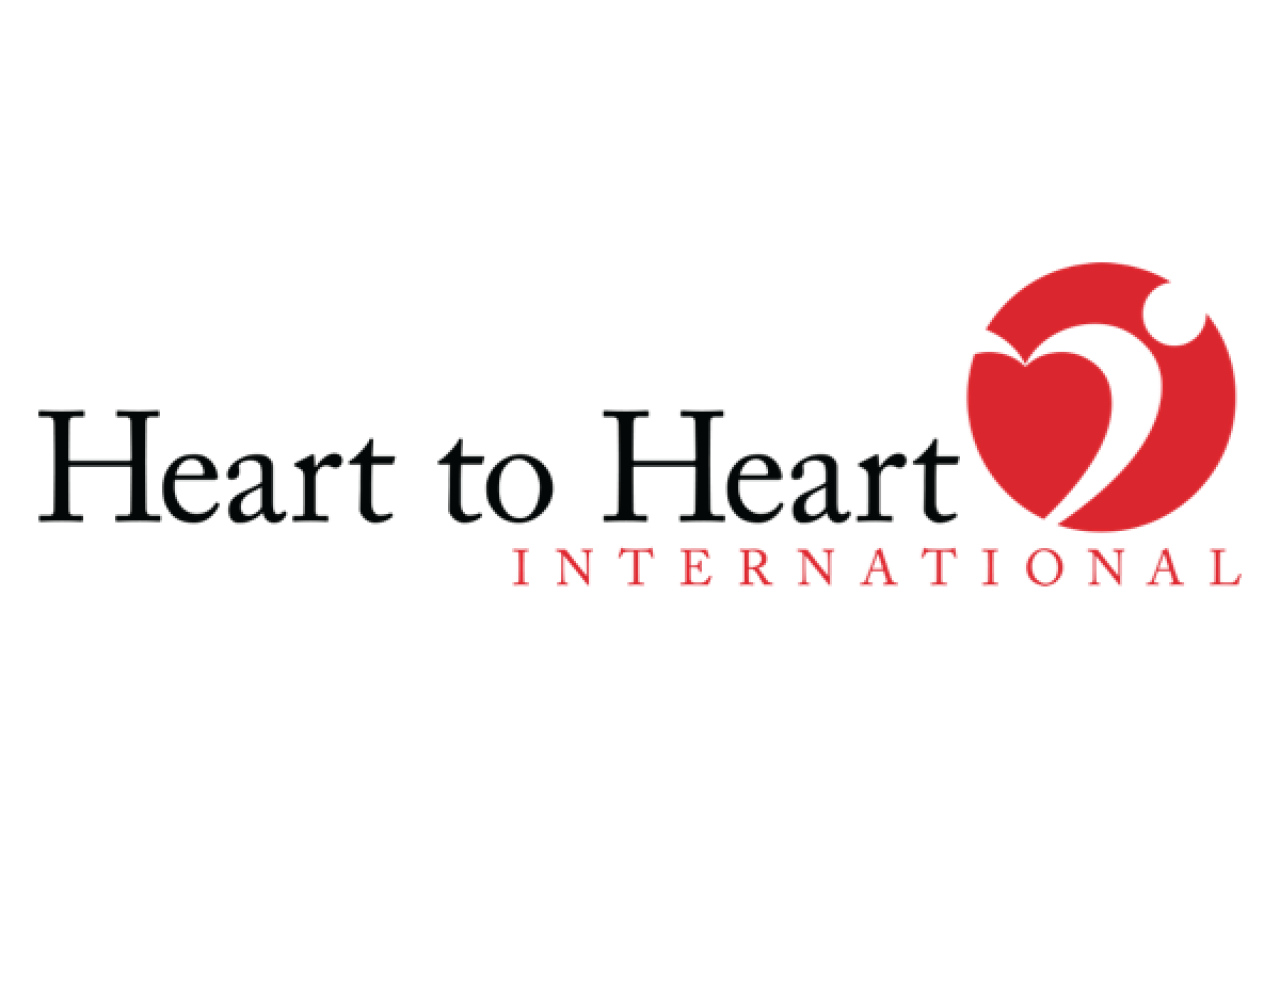 heart to heart international logo.